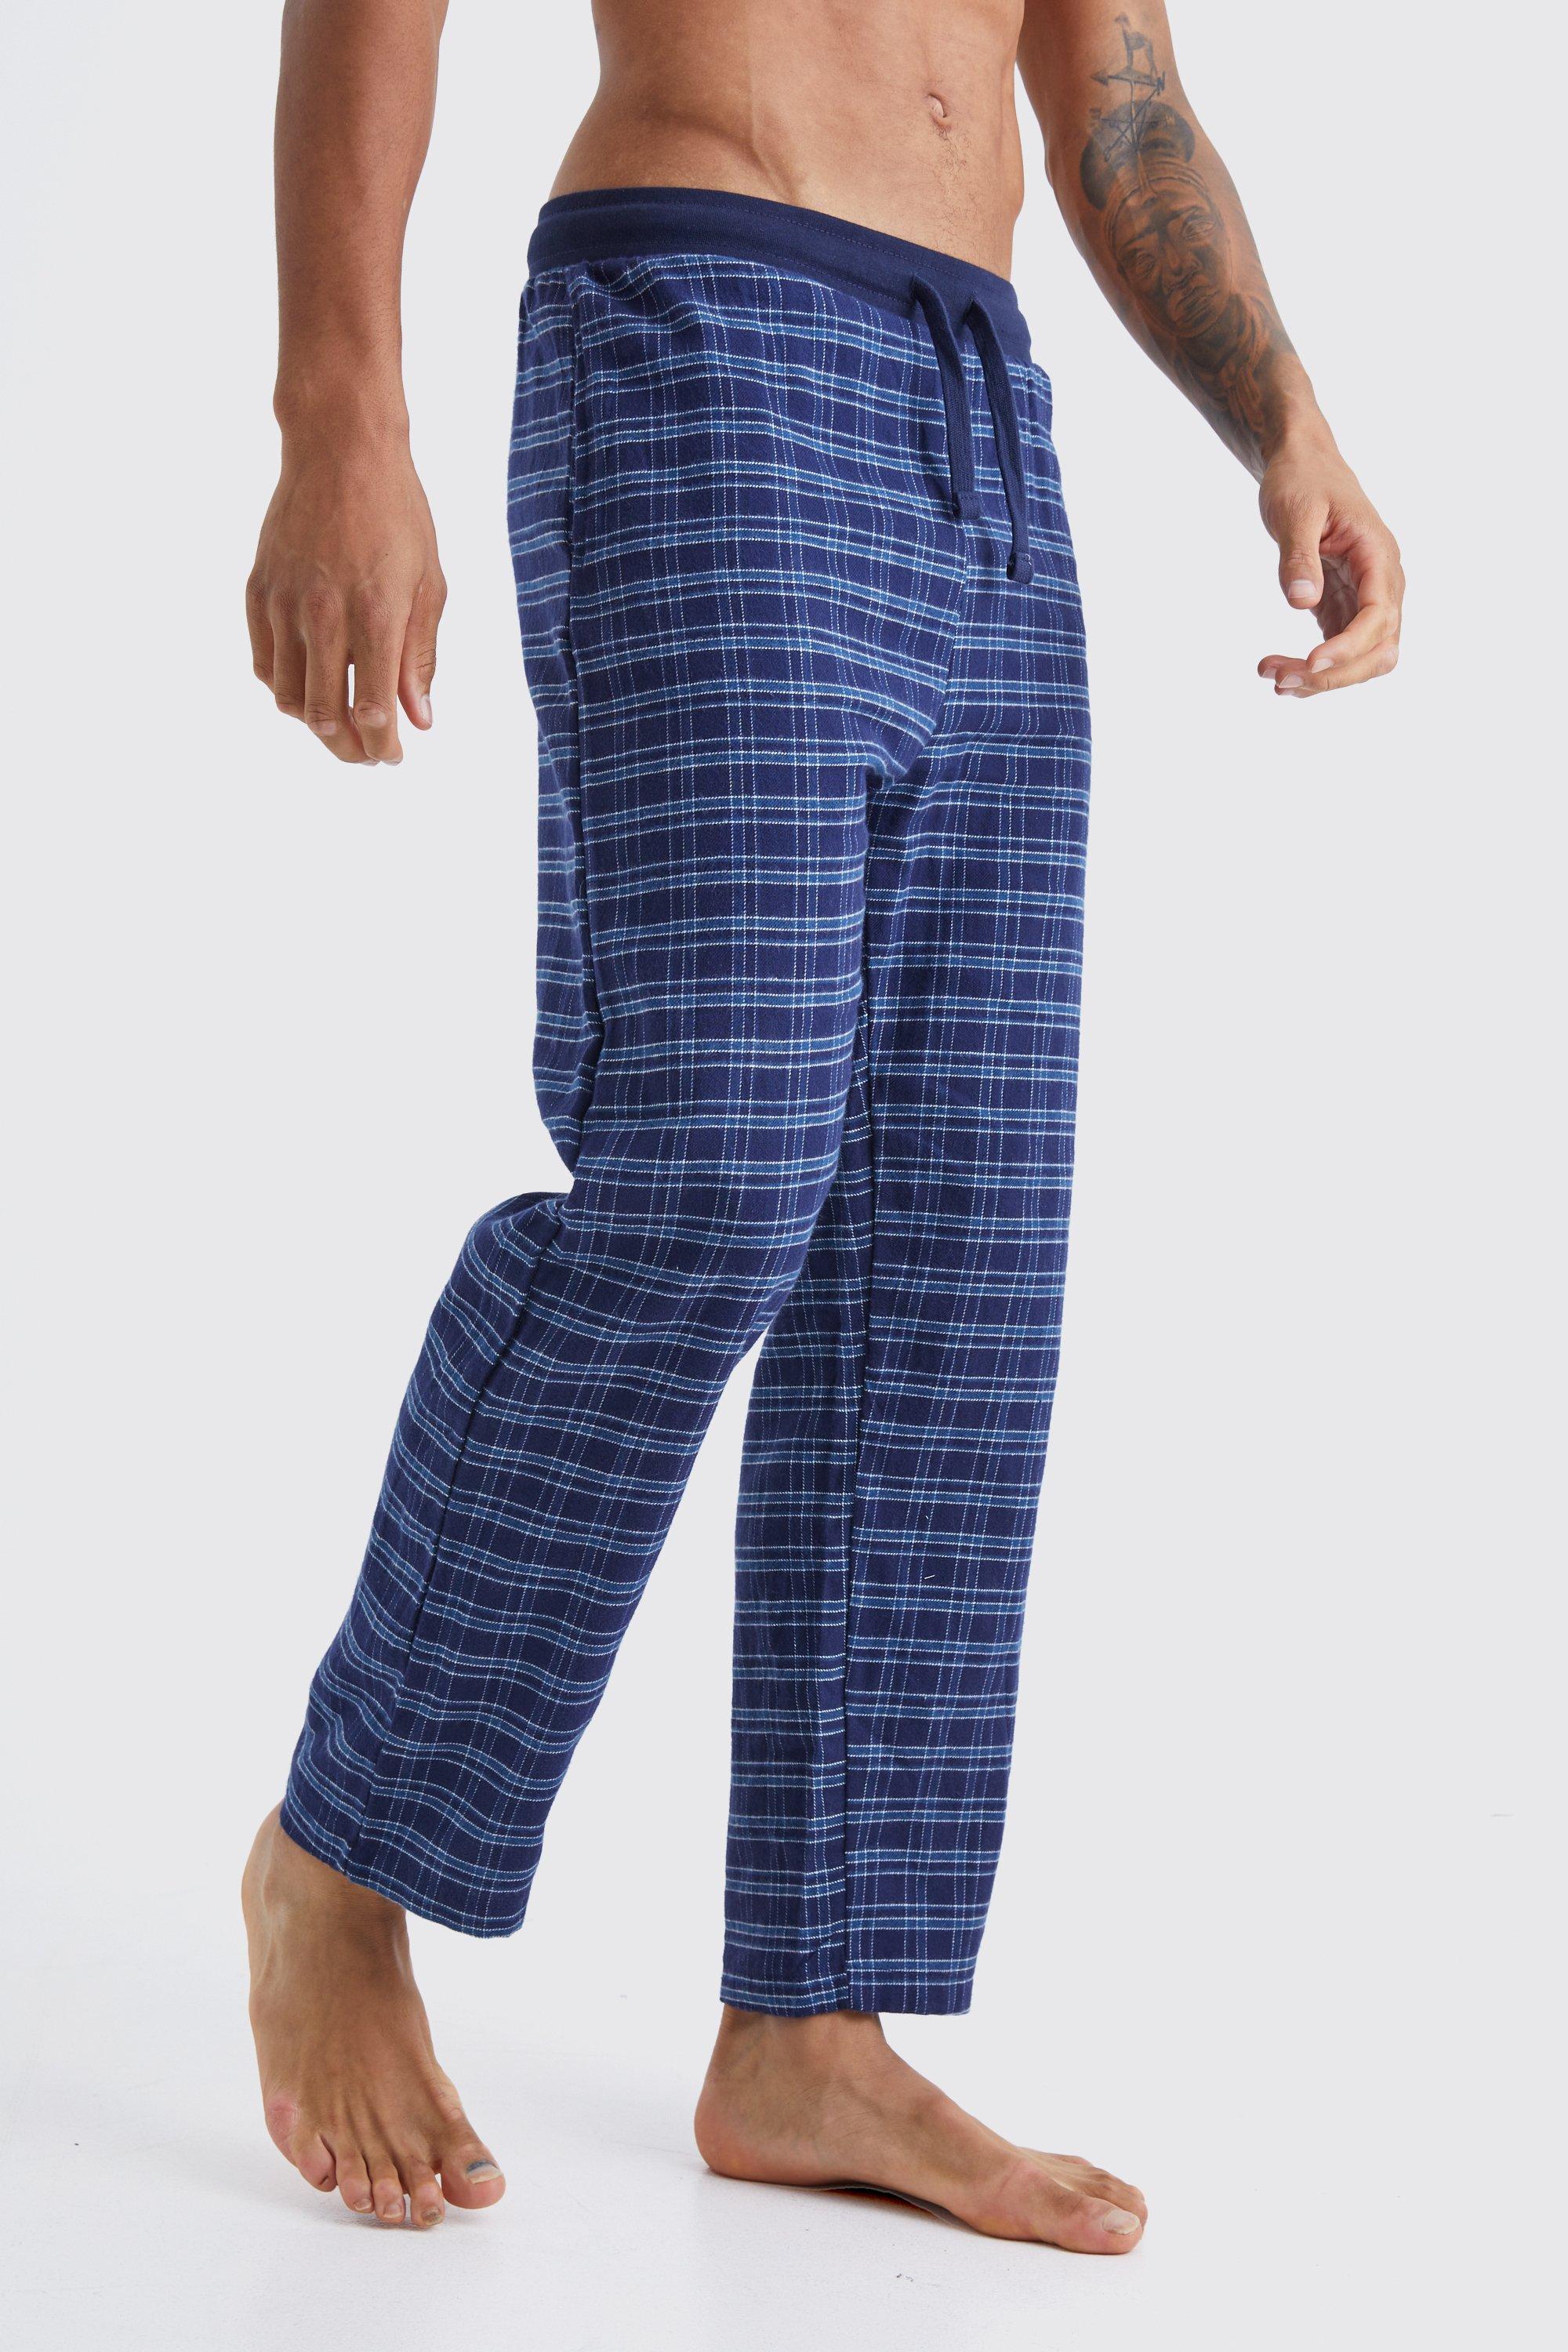 tall - pantalon de pyjama à carreaux homme - bleu - s, bleu